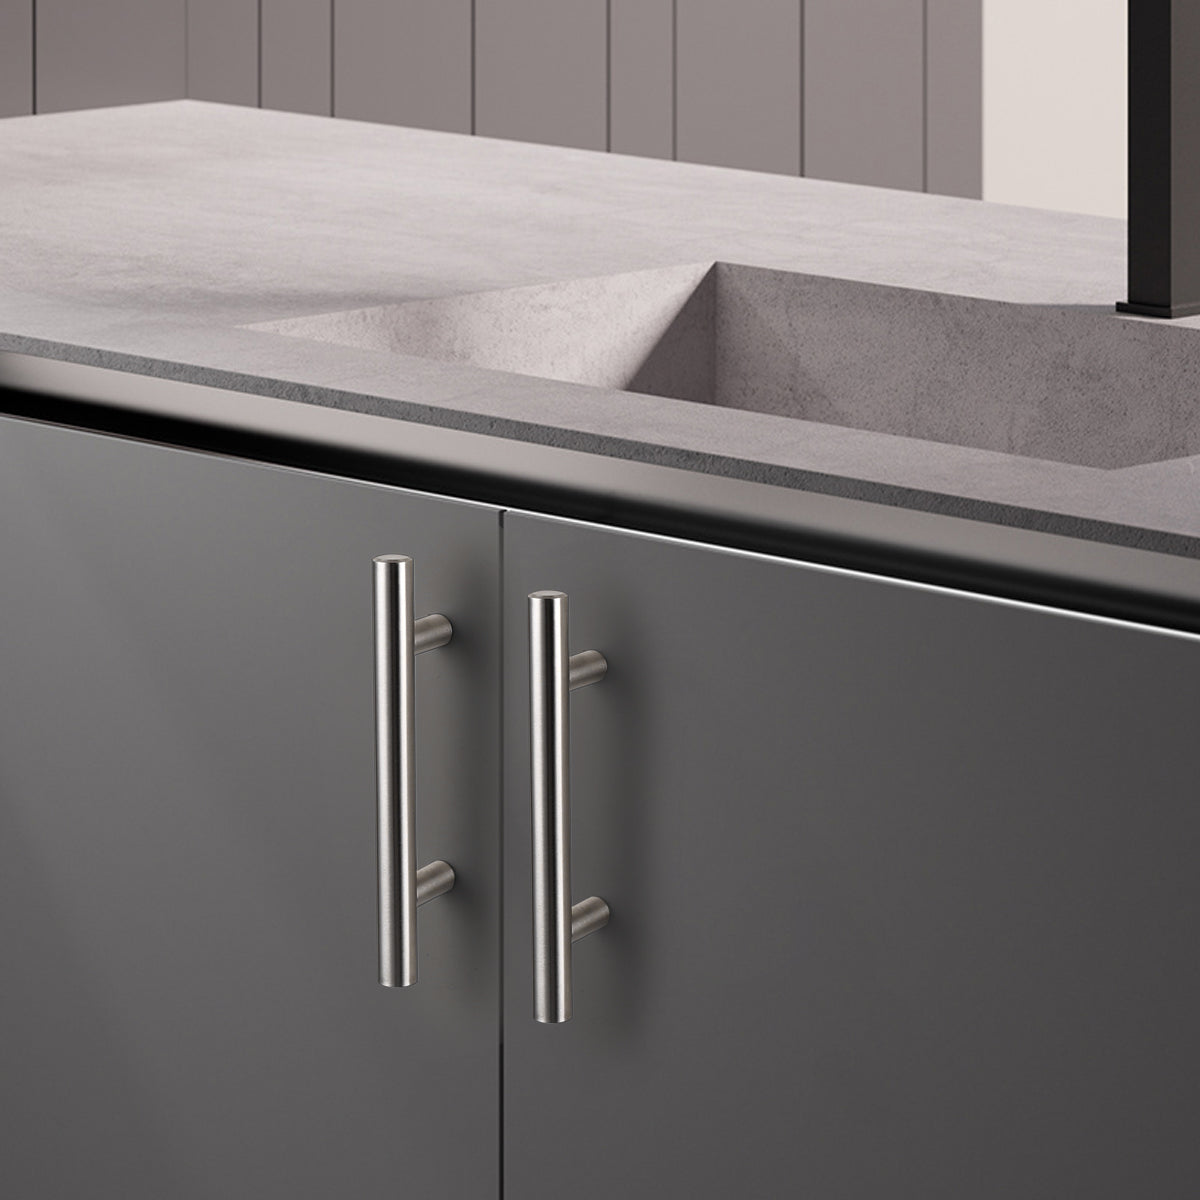 Probrico Stainless Steel Cabinet Handles Brushed Nickel Kitchen Hardwa